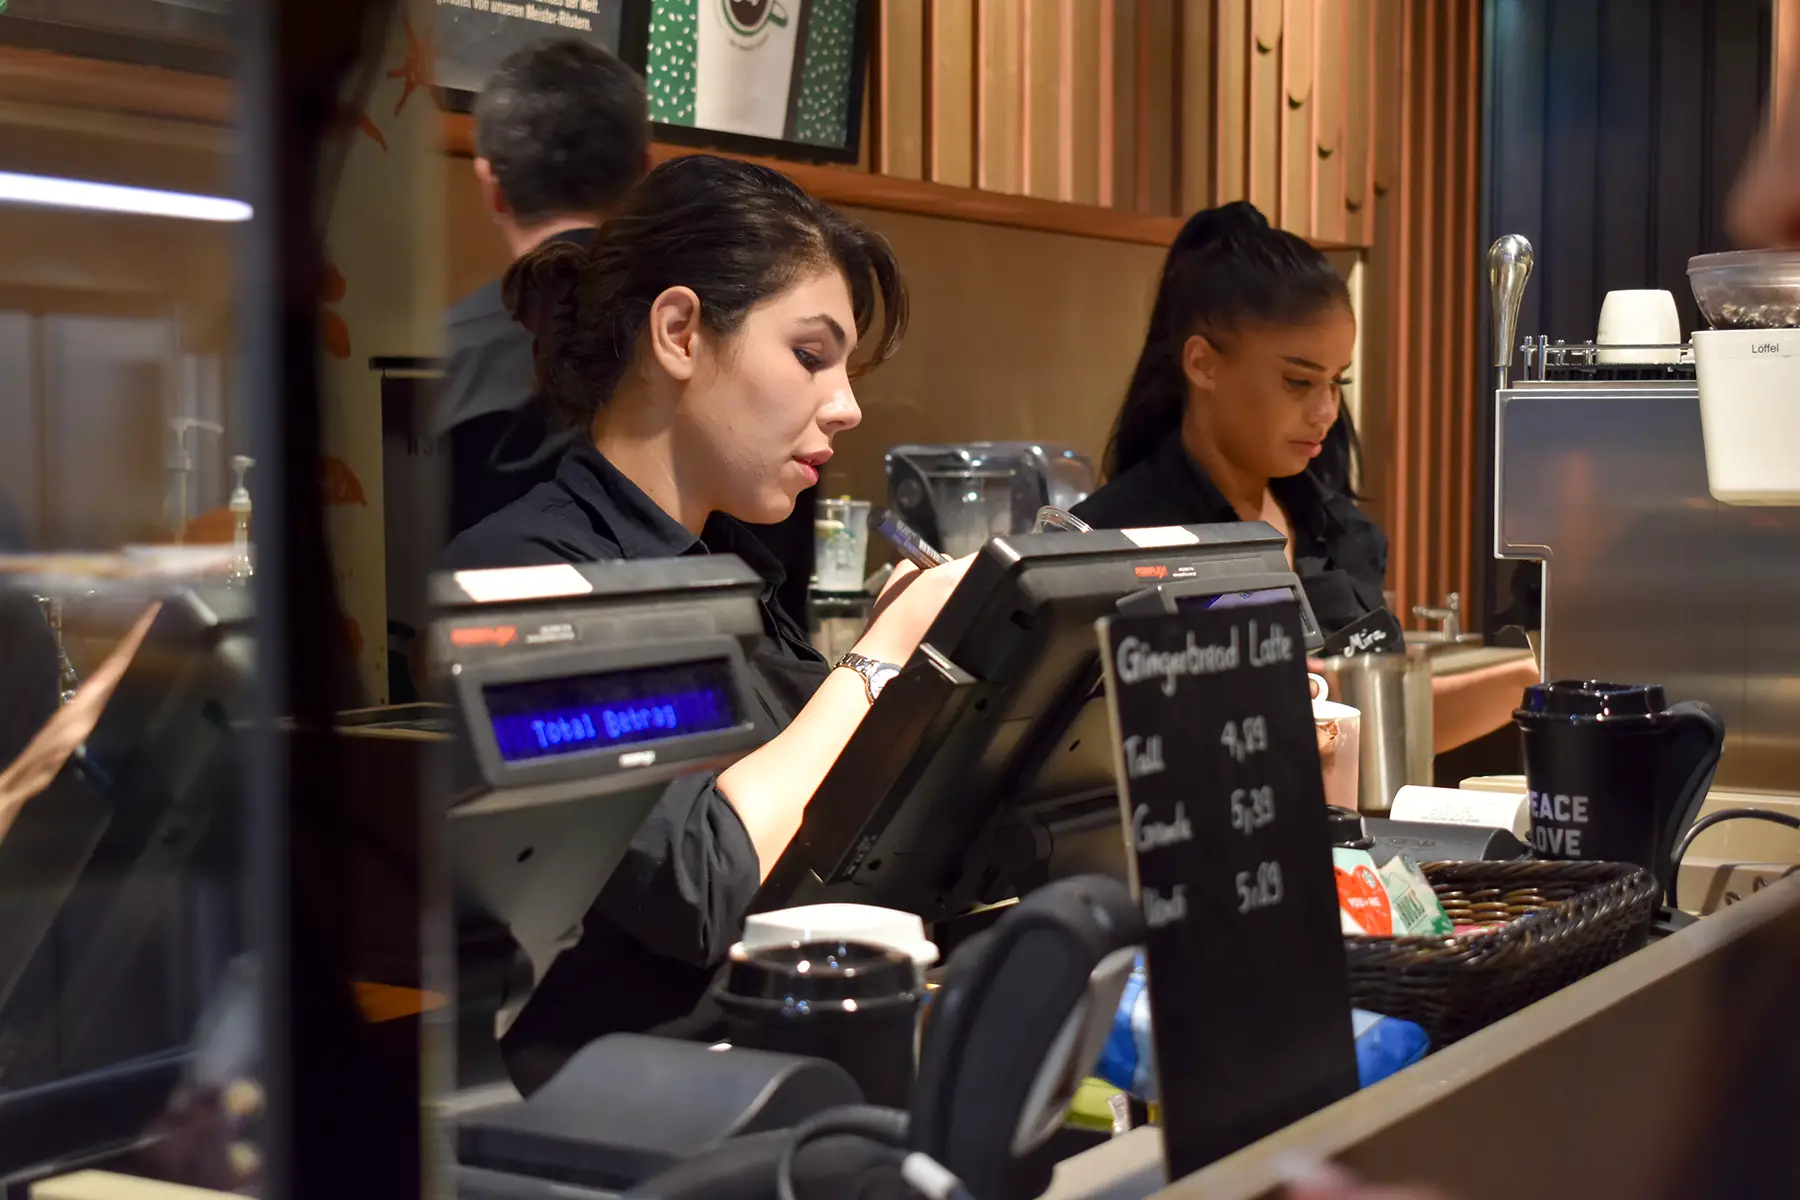 Women working at a cash register in a German café